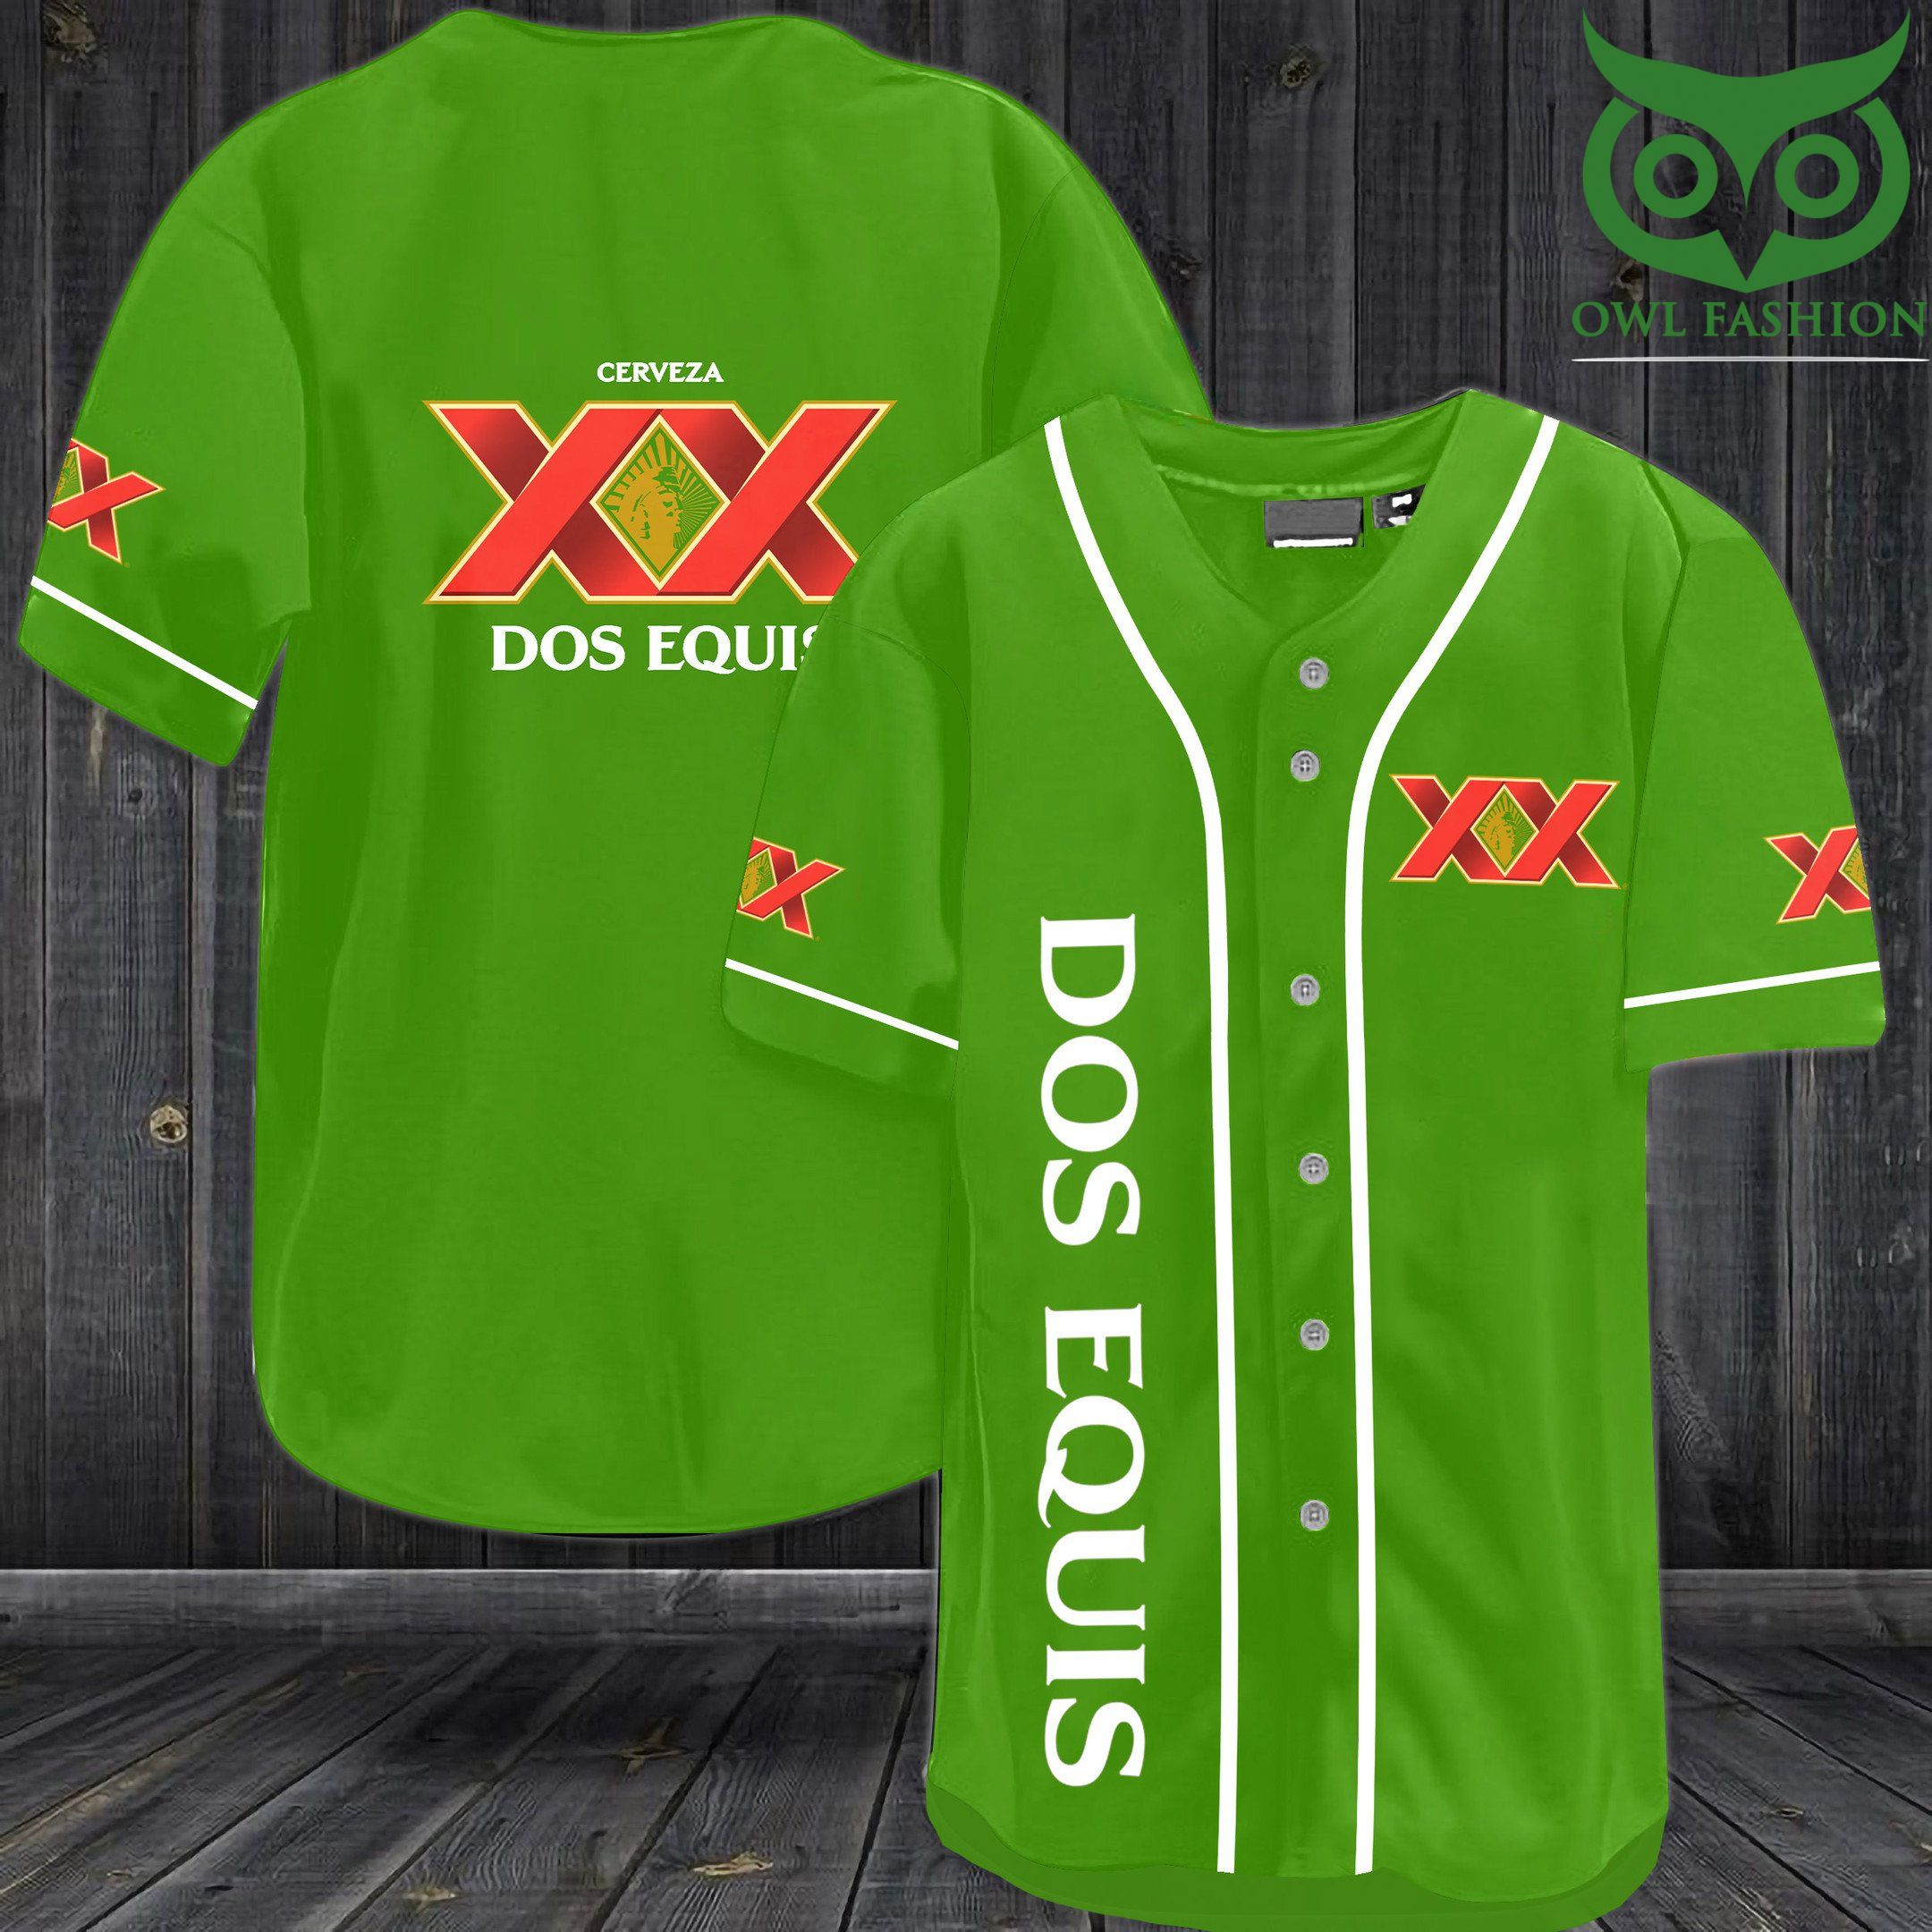 Dos Equis XX Cerveza Baseball Jersey Shirt